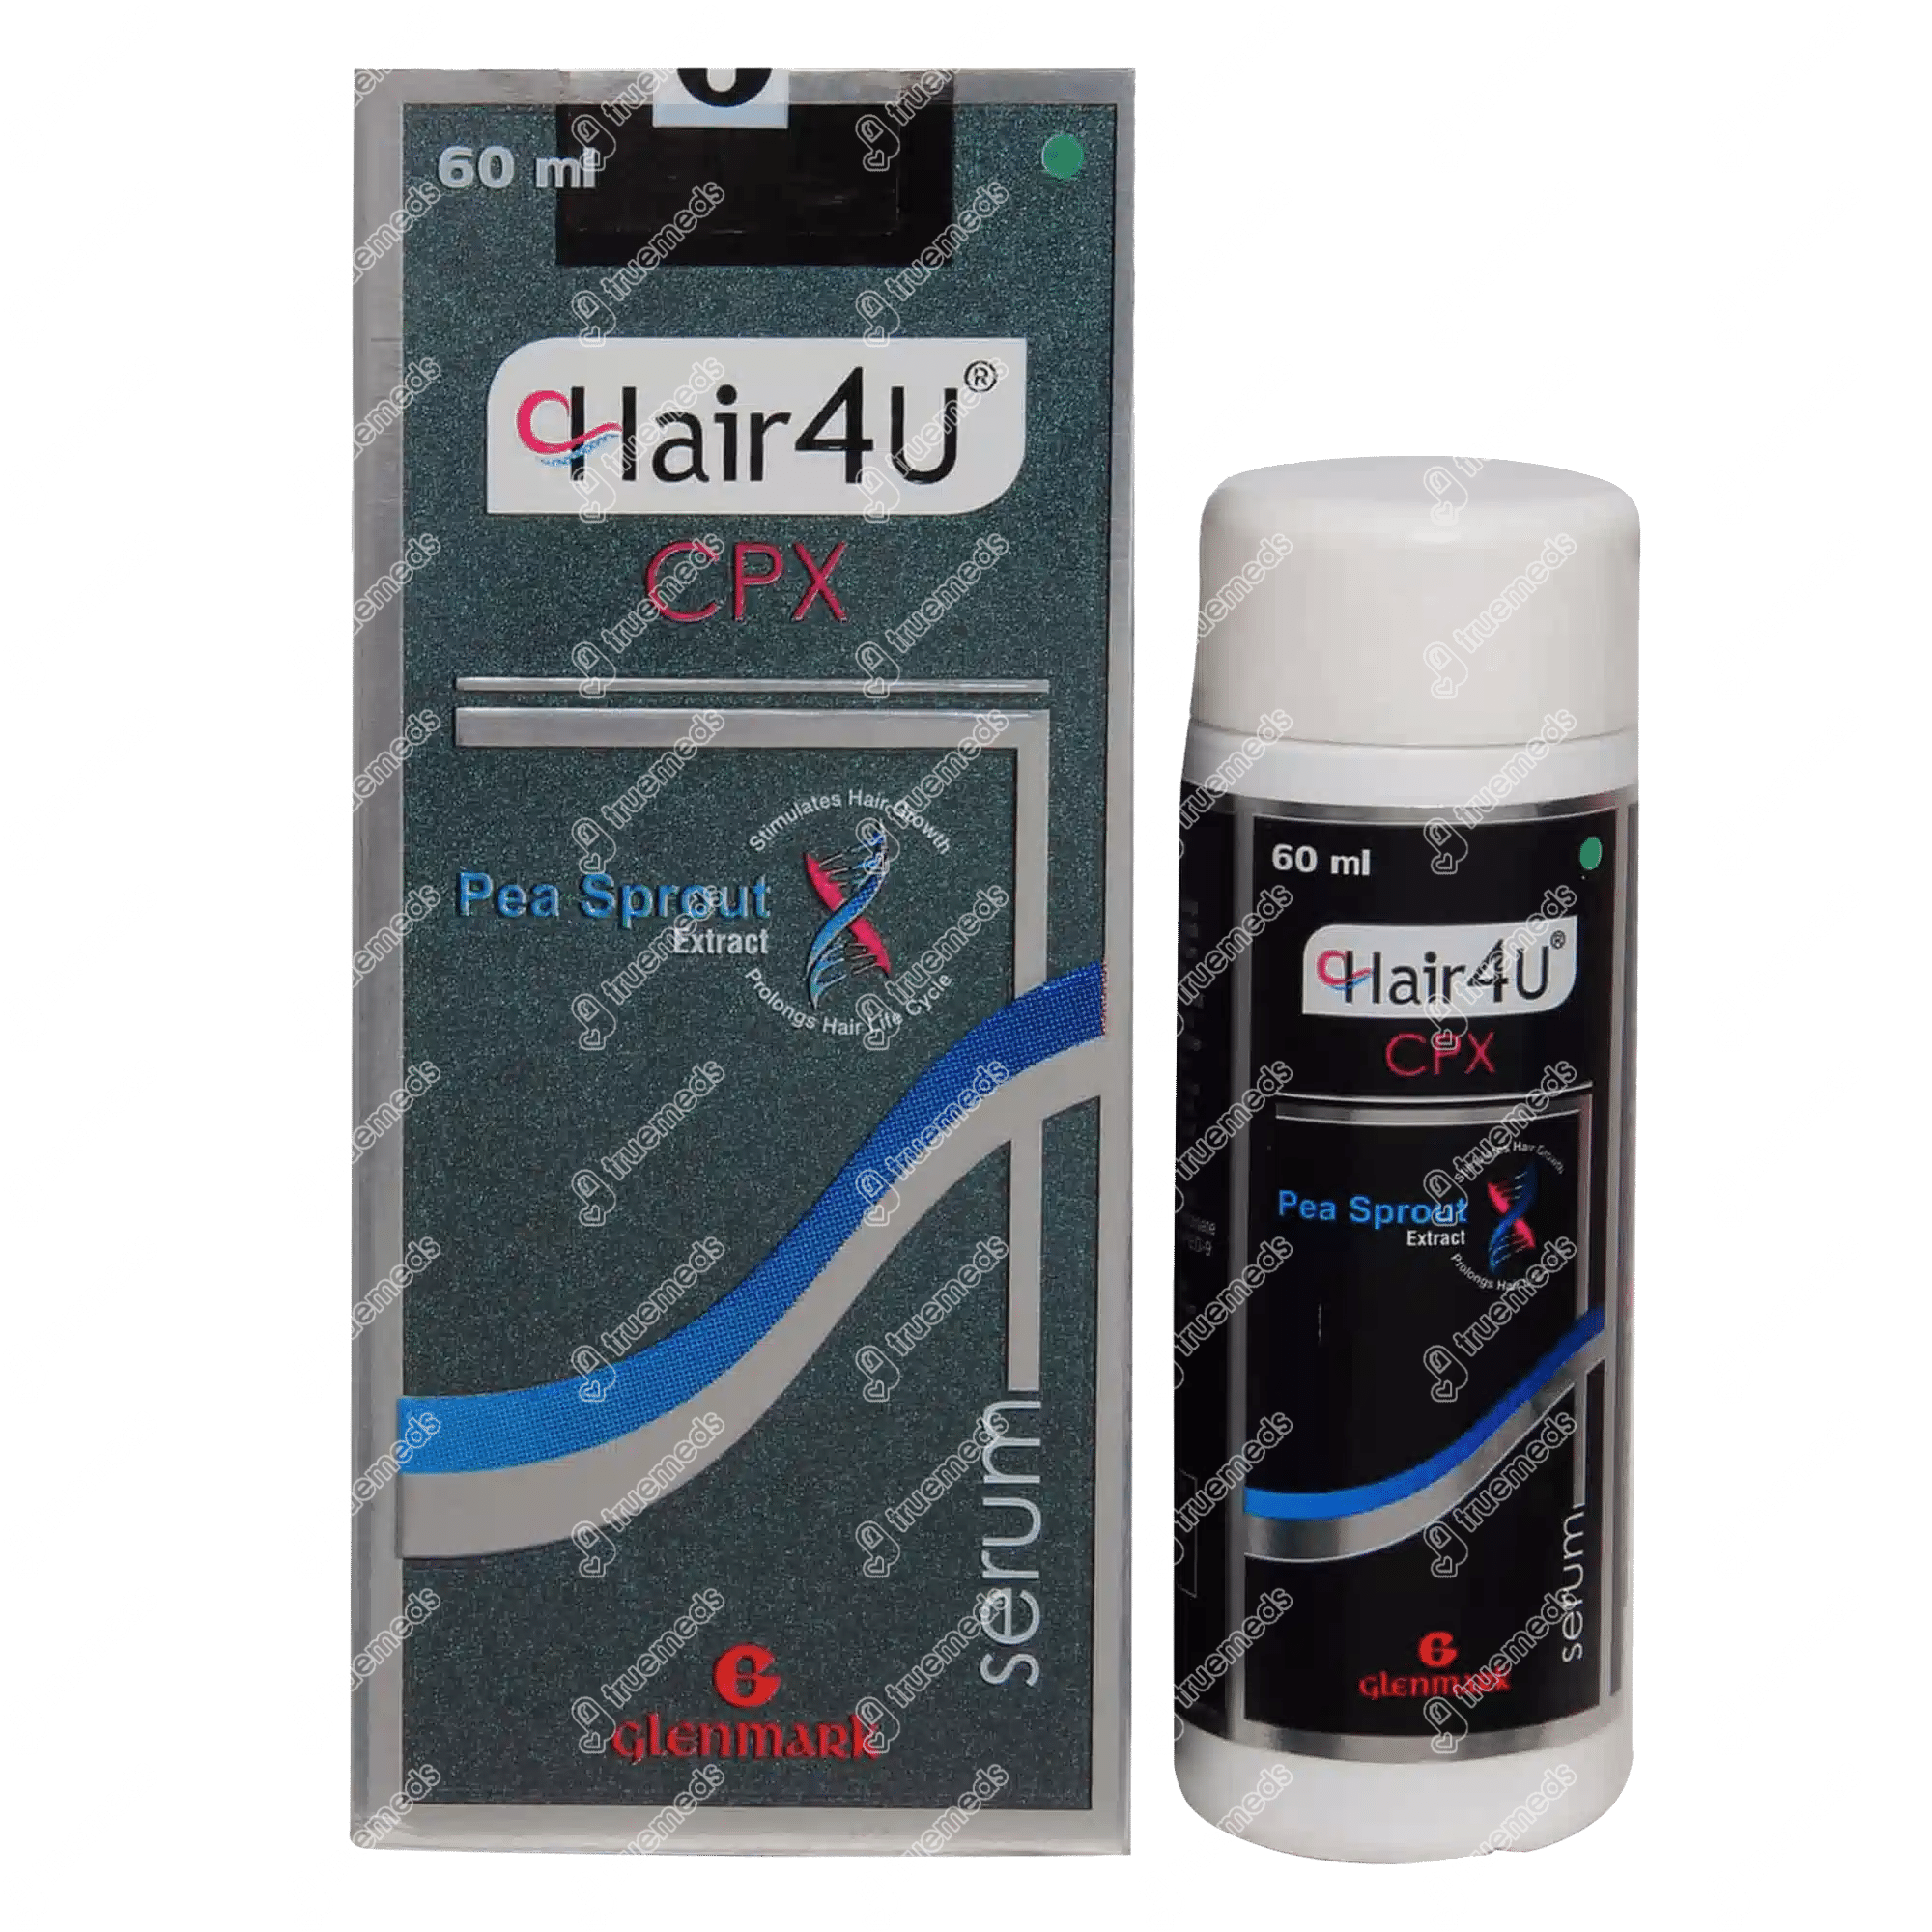 Buy Hair4U Biofluence Therapeutic Shampoo Online at Best Price of Rs 450   bigbasket